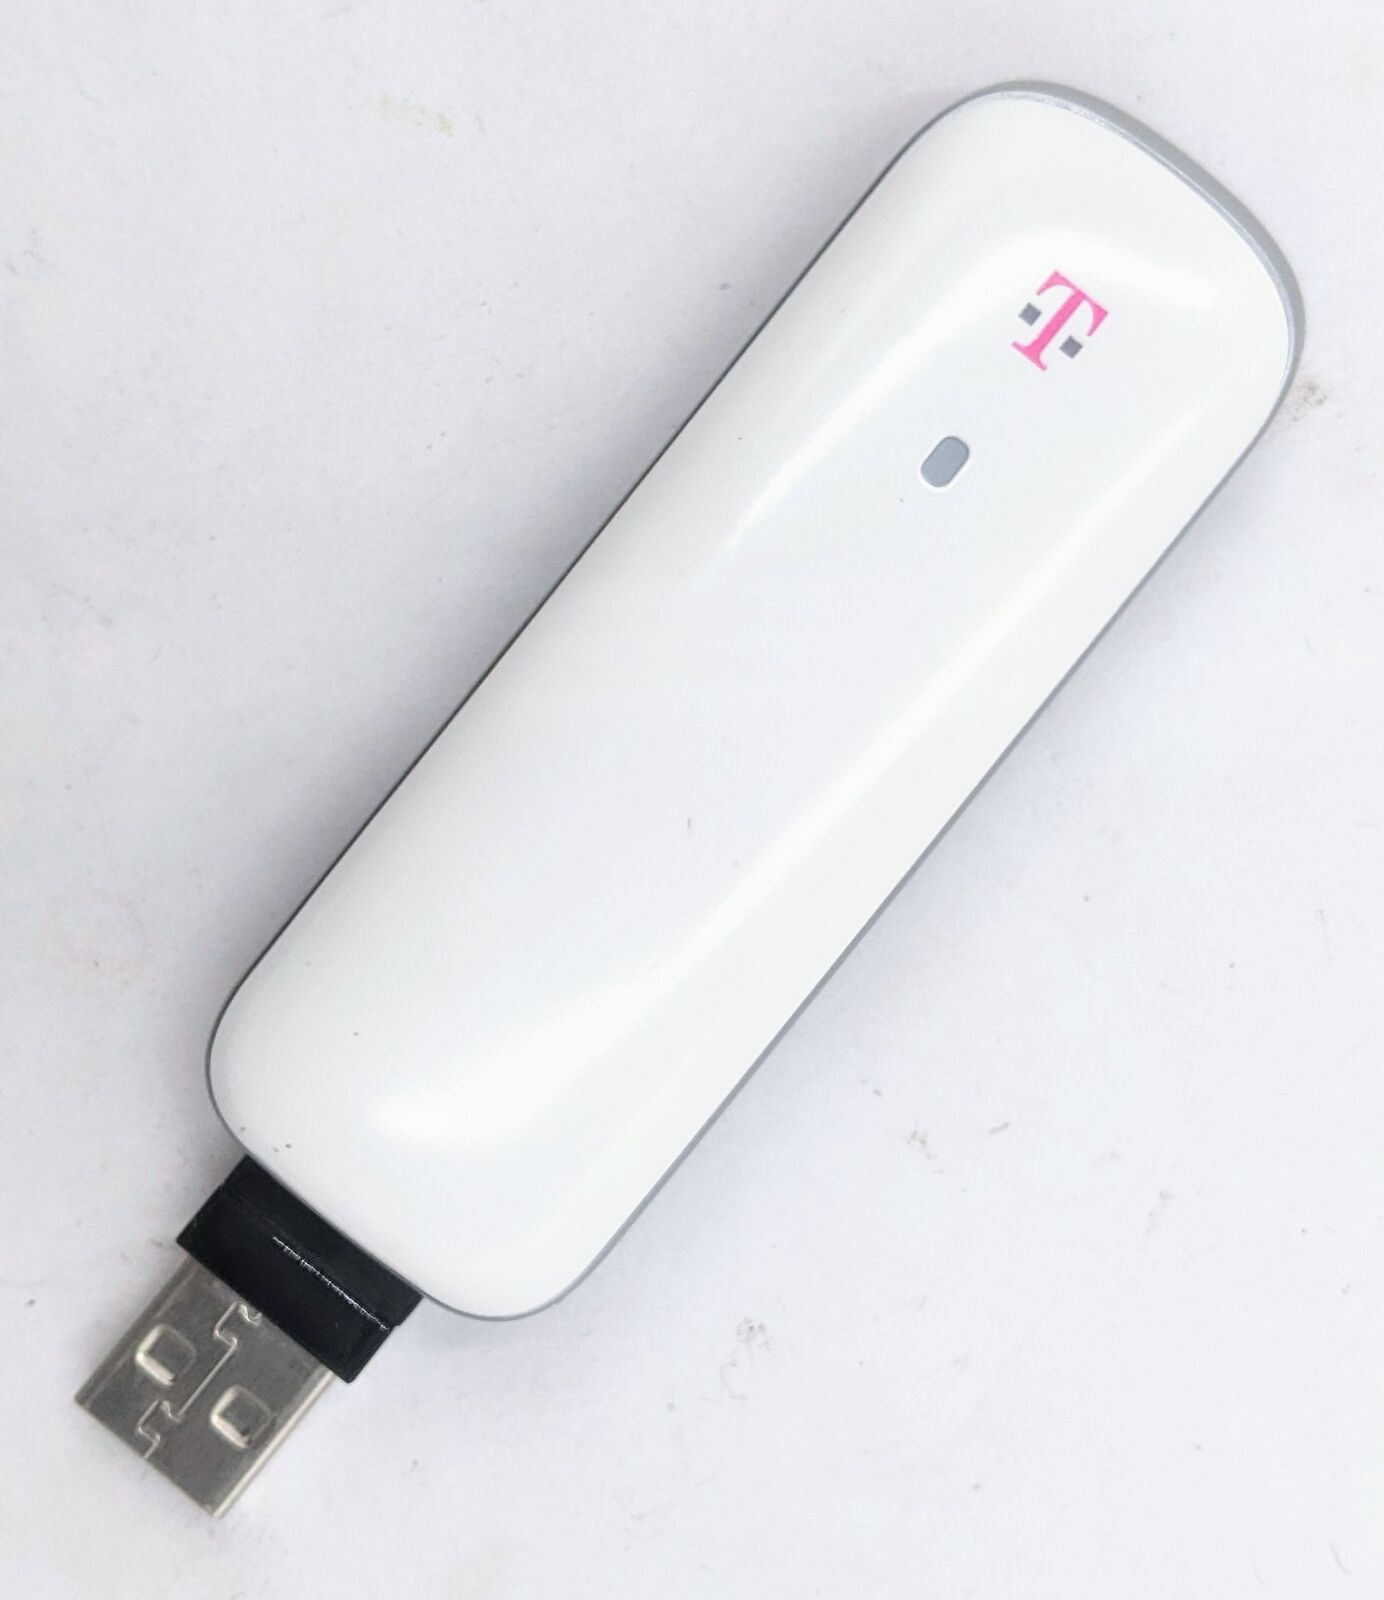 T-mobile Jet 2.0 4g Hspa+ Huawei UMG366 USB Mobile Broadband Modem